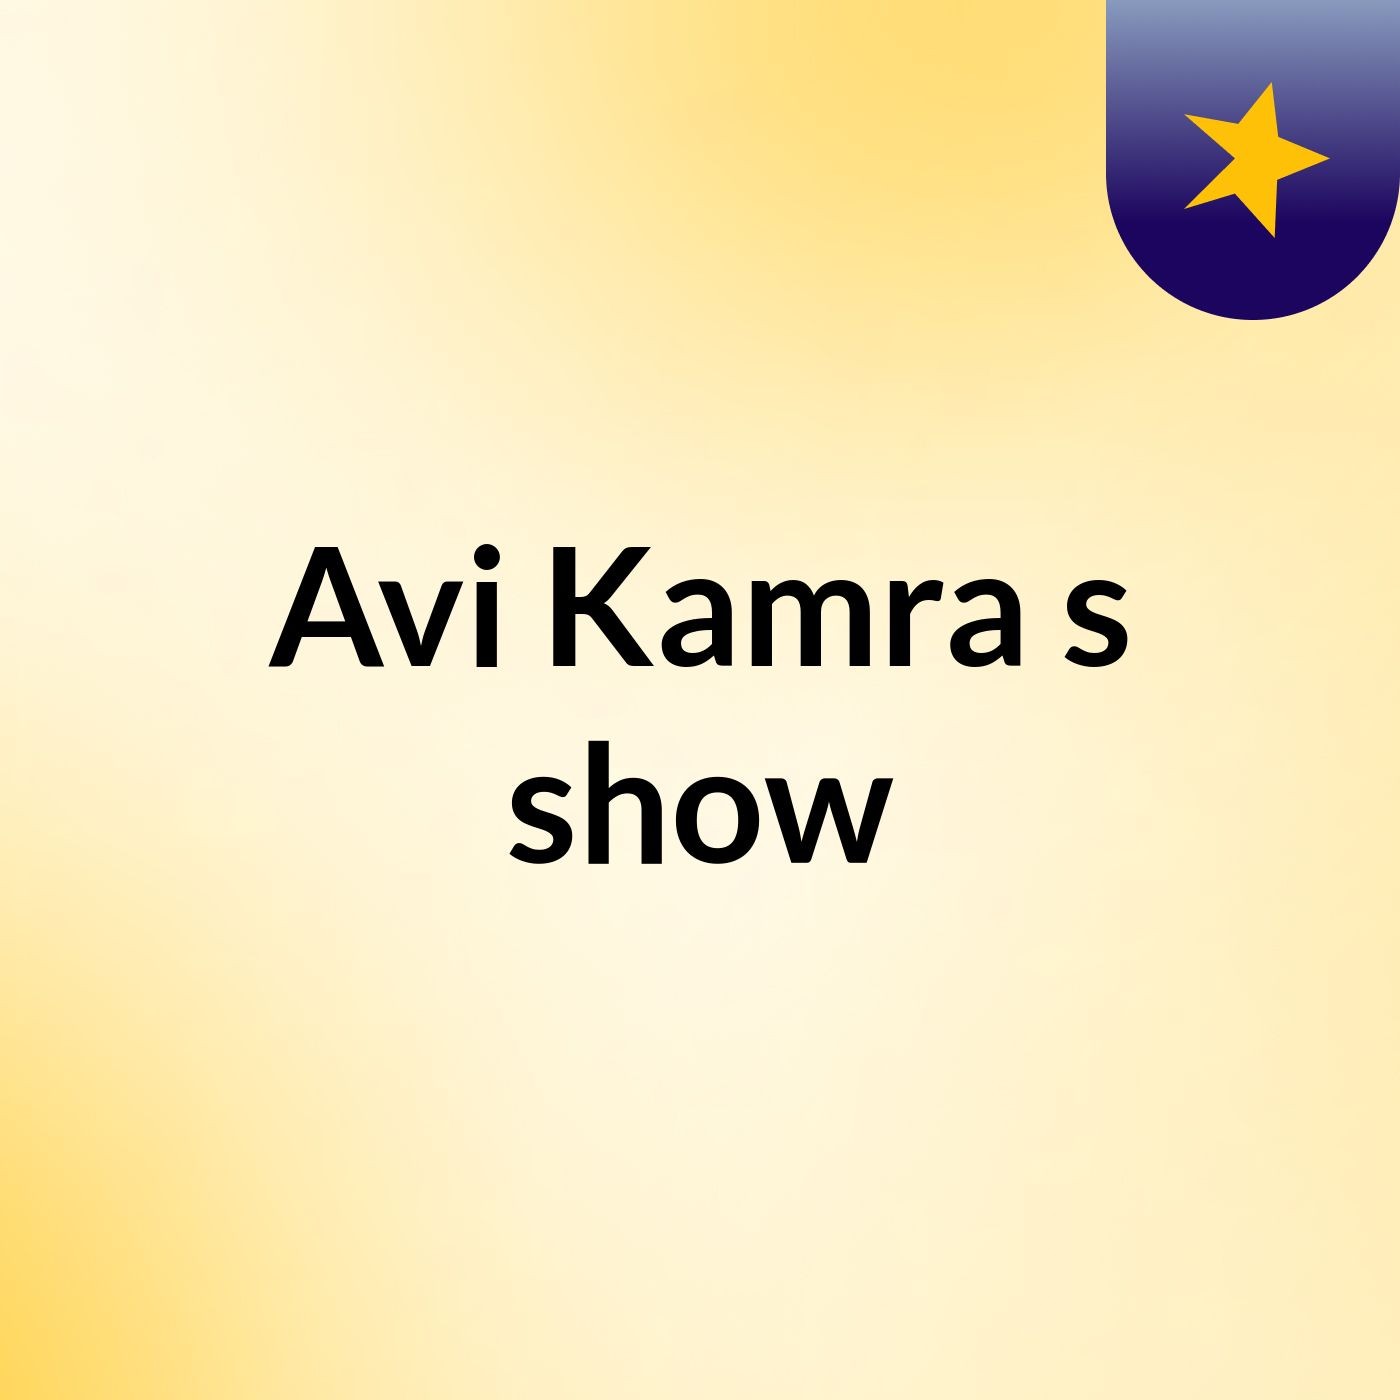 Avi Kamra's show